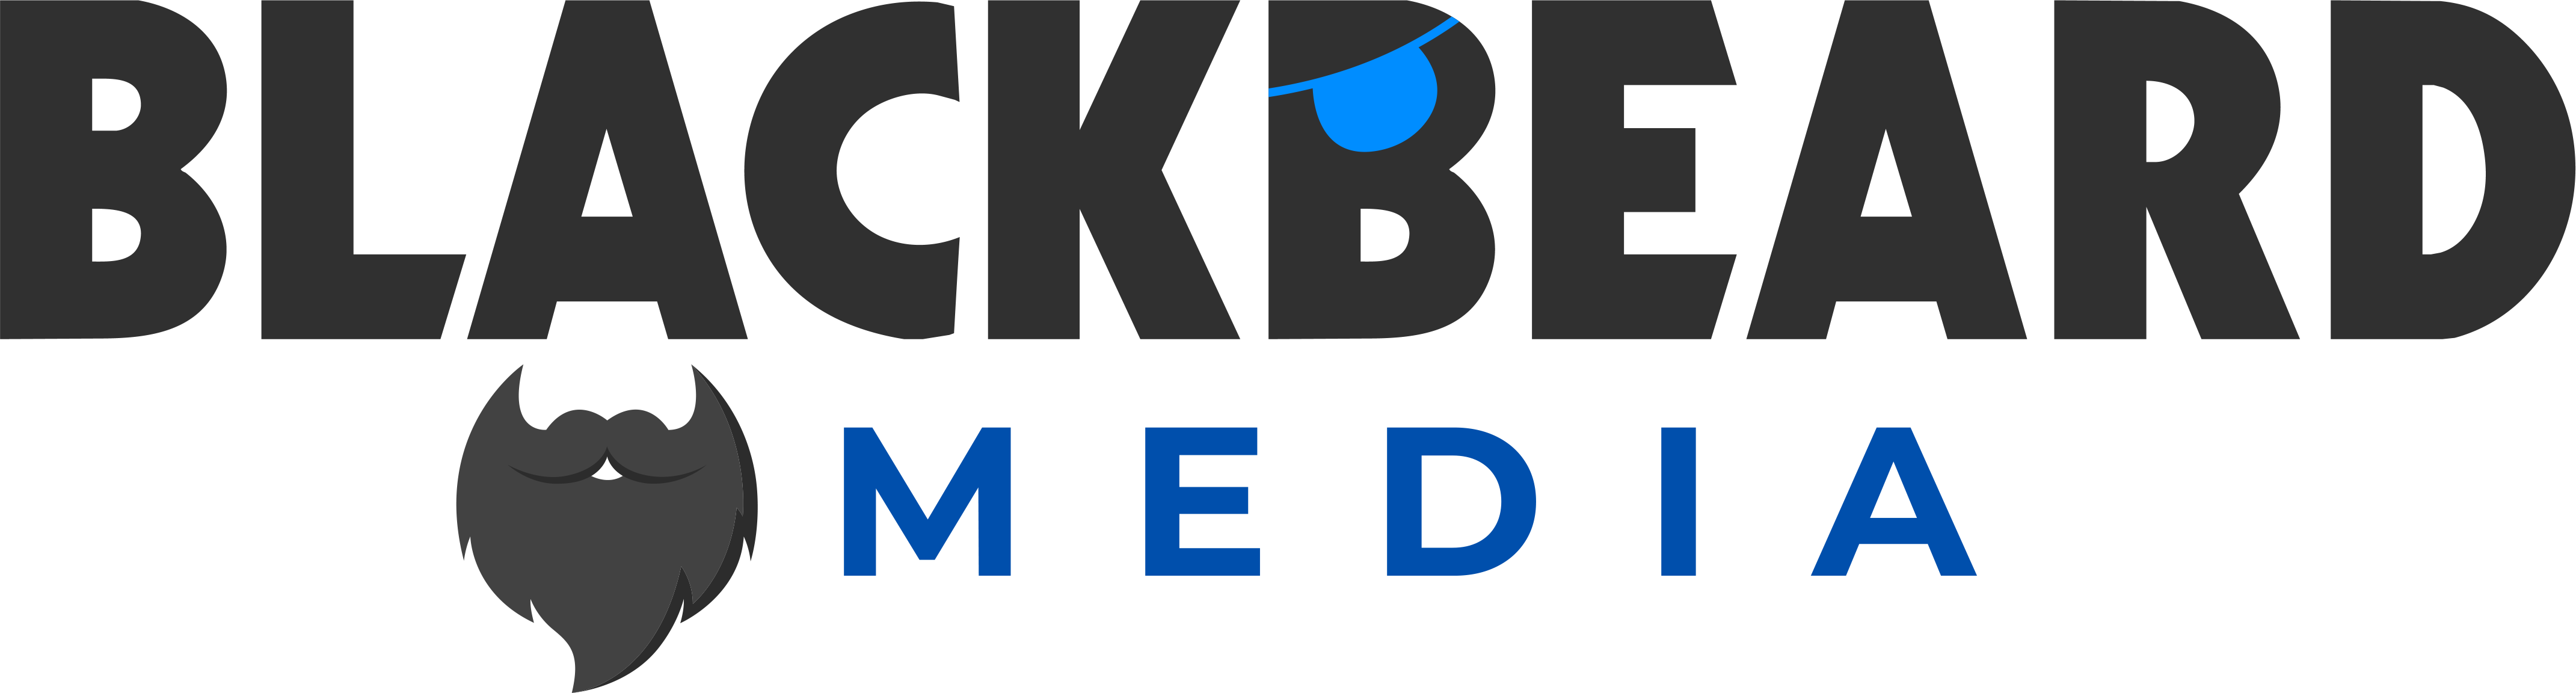 Blackbeard Media